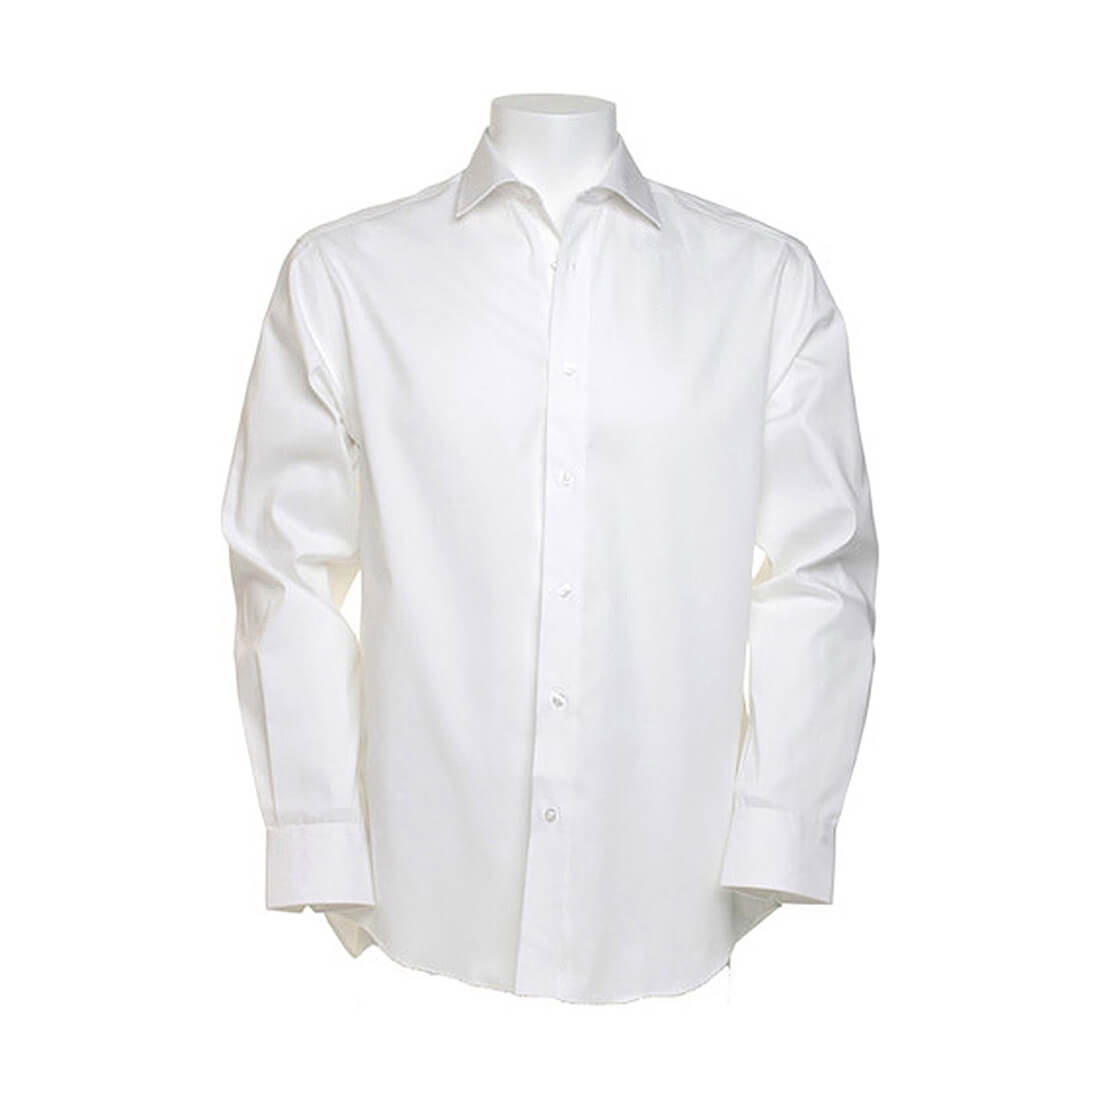 Executive Premium Oxford Shirt LS - Safetywear